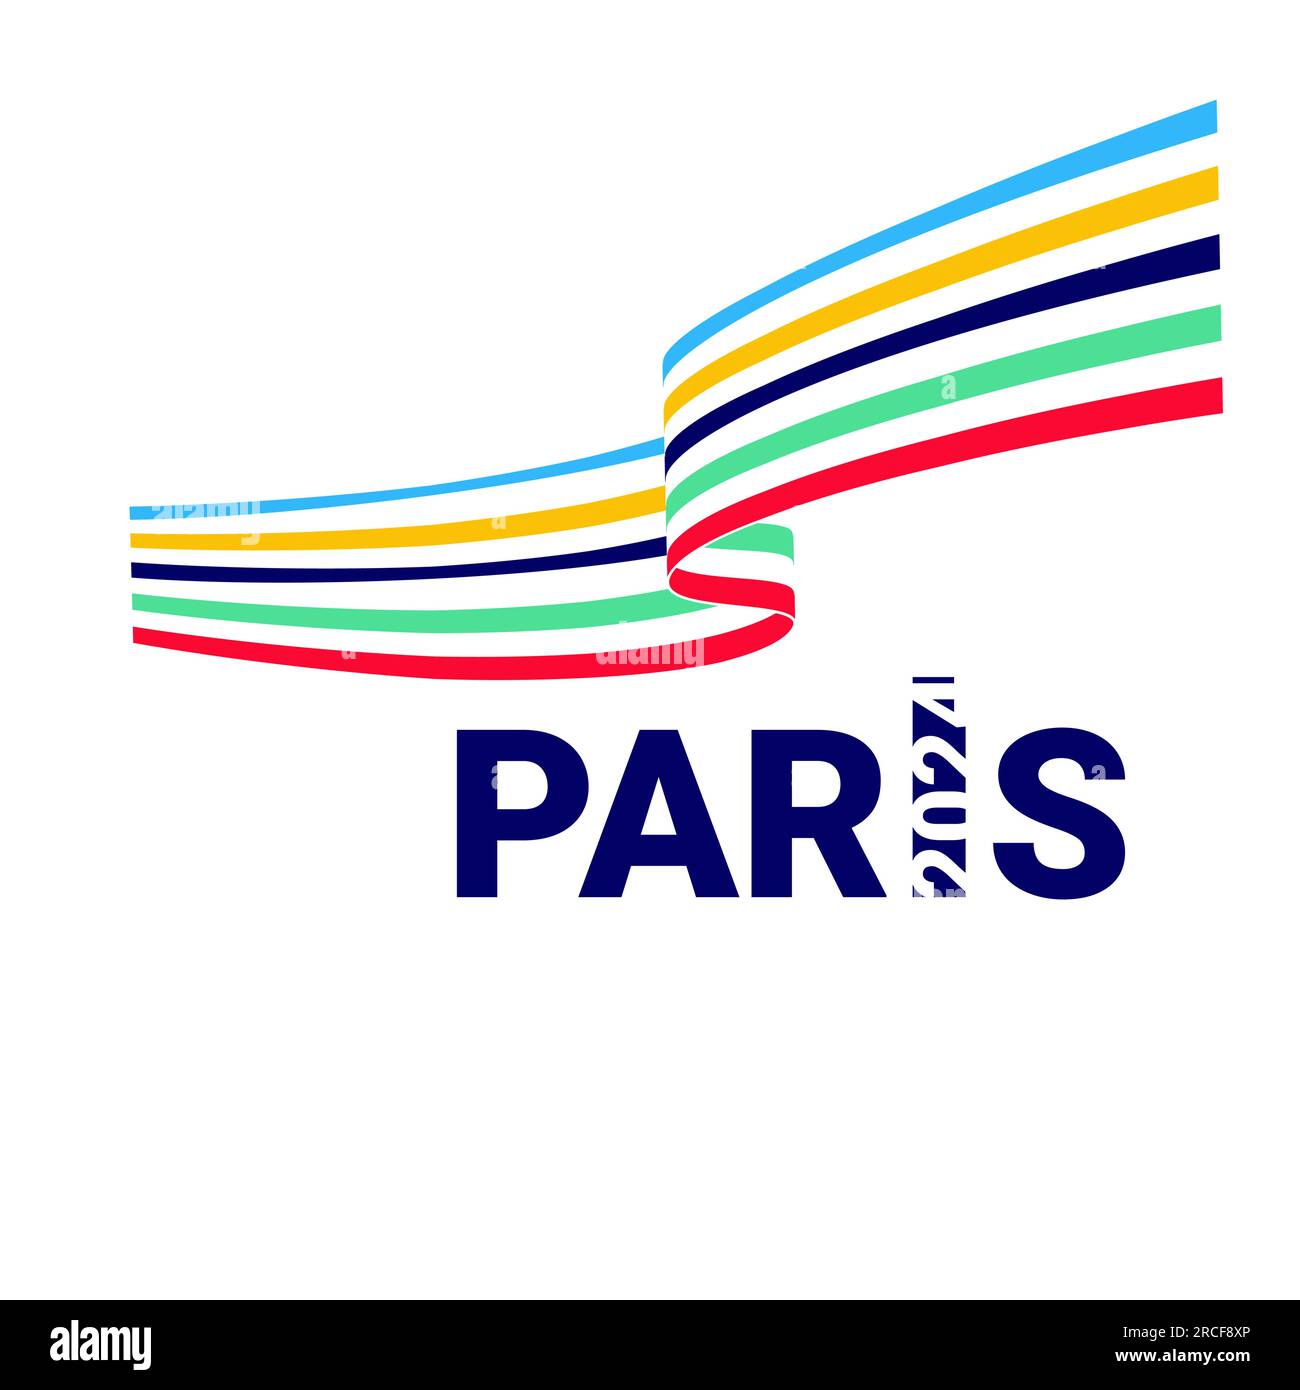 Paris 2024 Olympics. Logo for the Olympics Stock Vector Image & Art Alamy